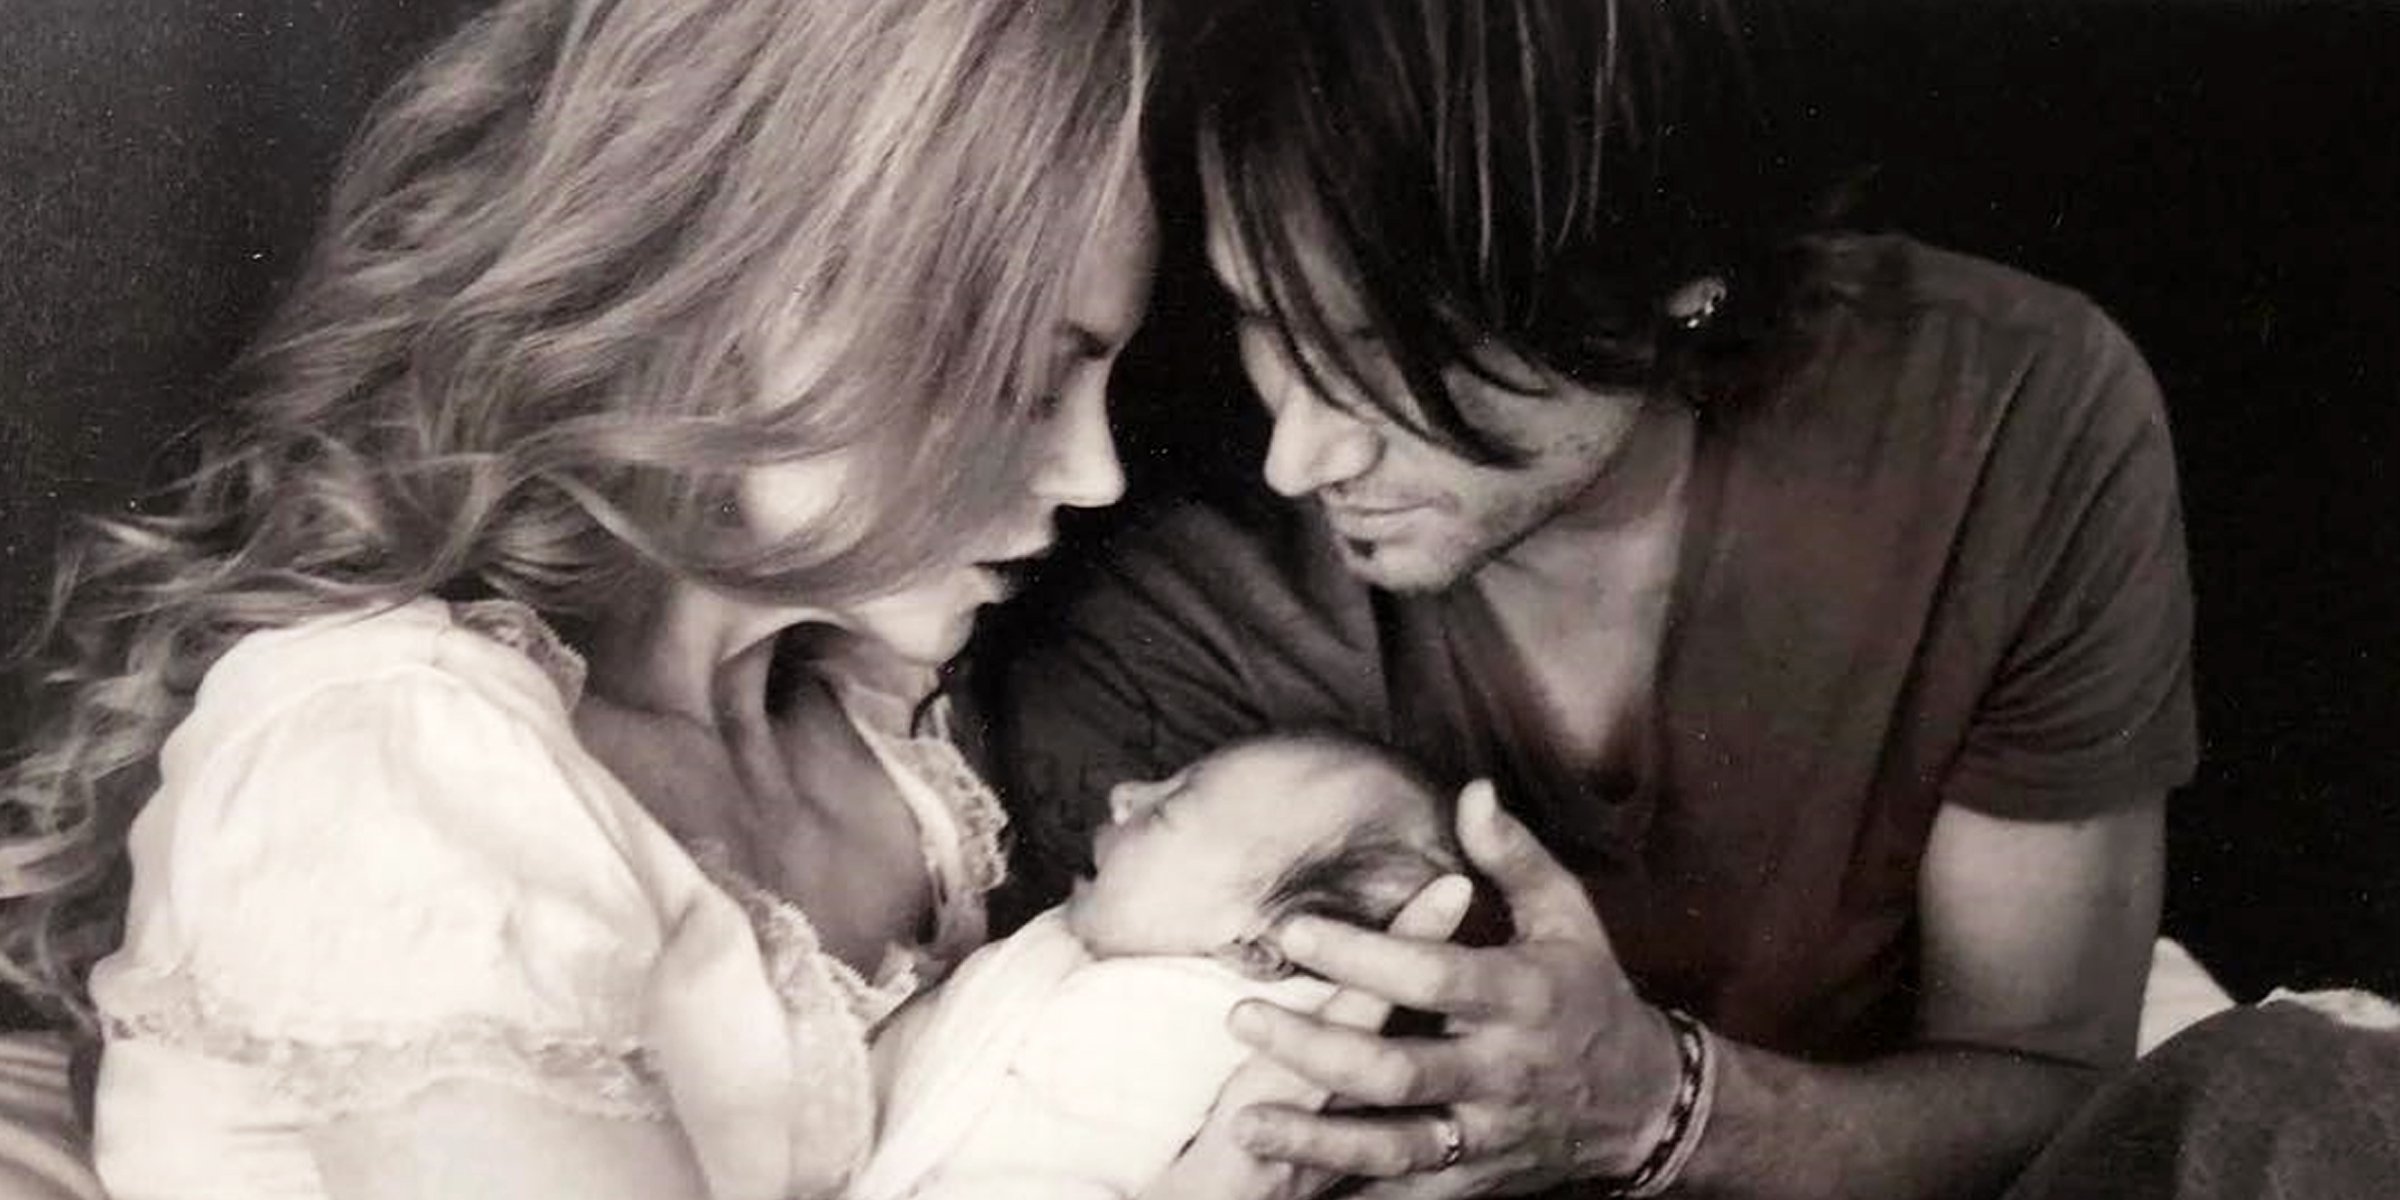 Nicolle Kidman, Keith Urban, and their first daughter | Source: Instagram.com/nicolekidman